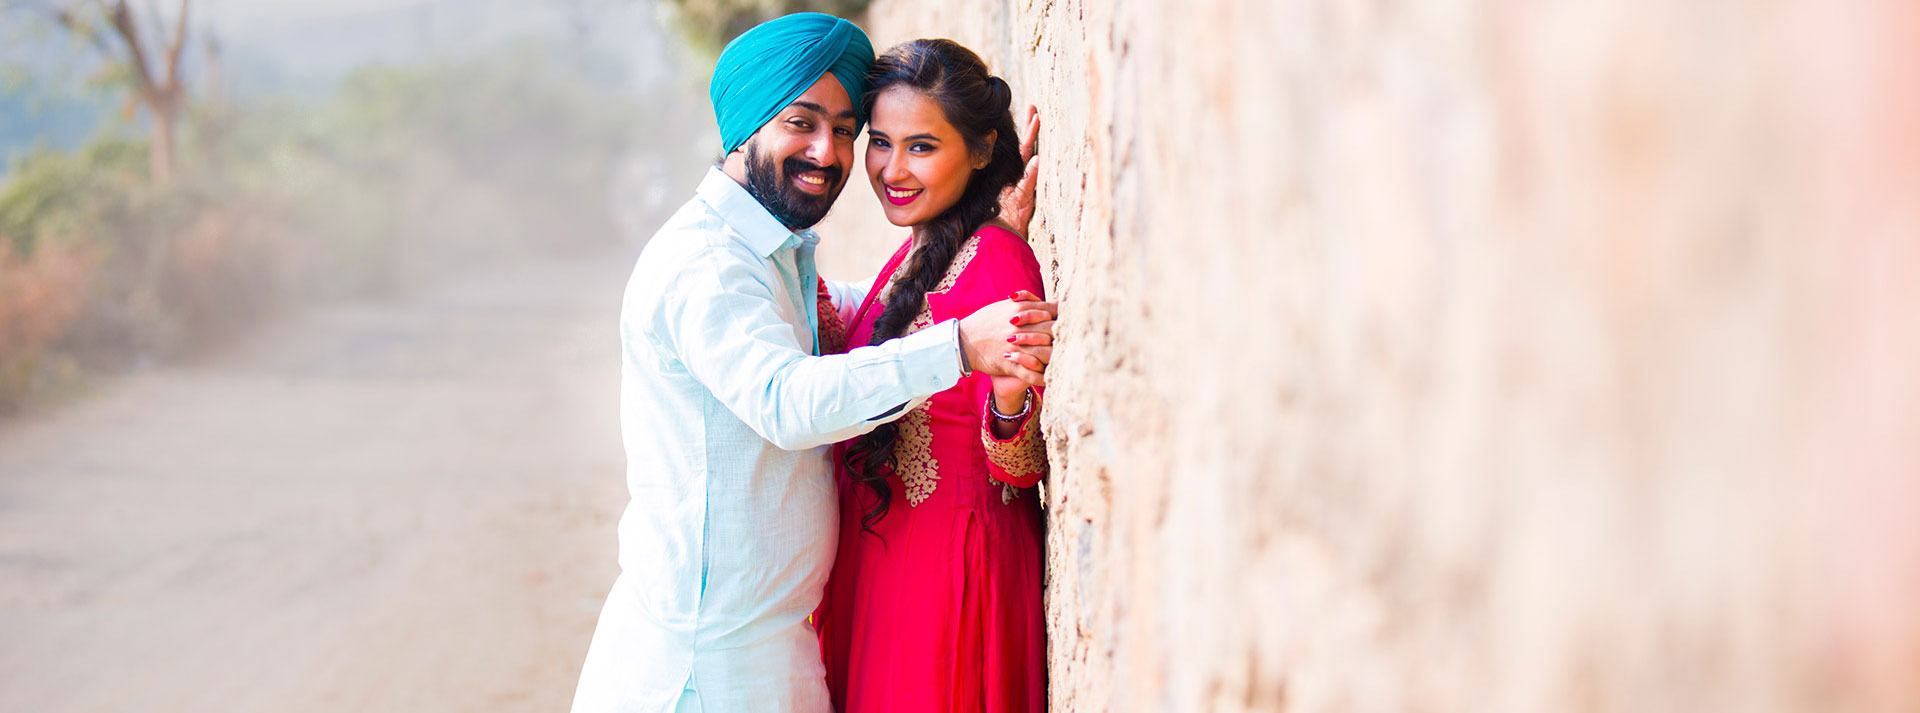 Best pre wedding photographers in delhi, NCR, india